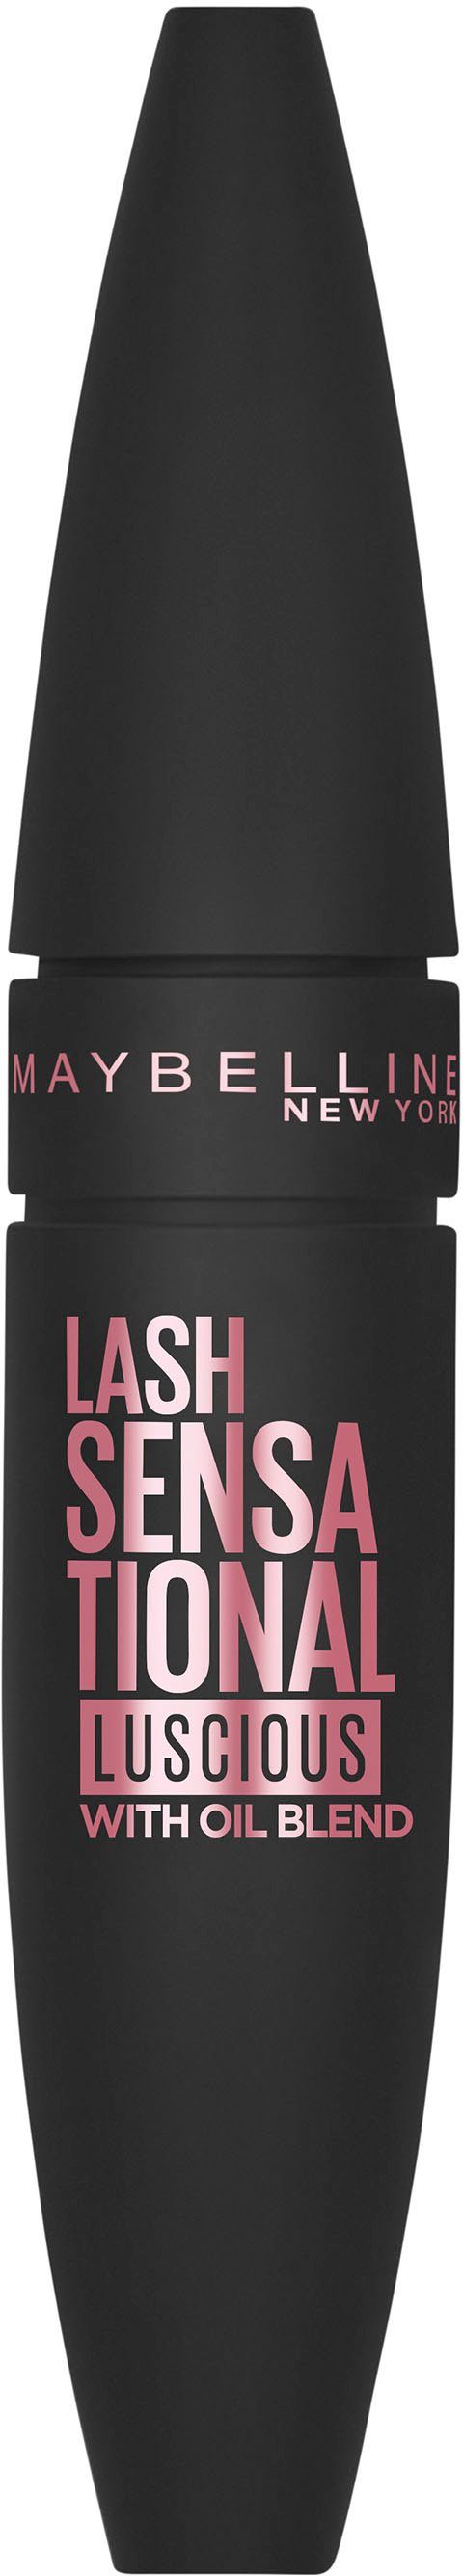 Luscious YORK MAYBELLINE Lash Mascara Sensational NEW